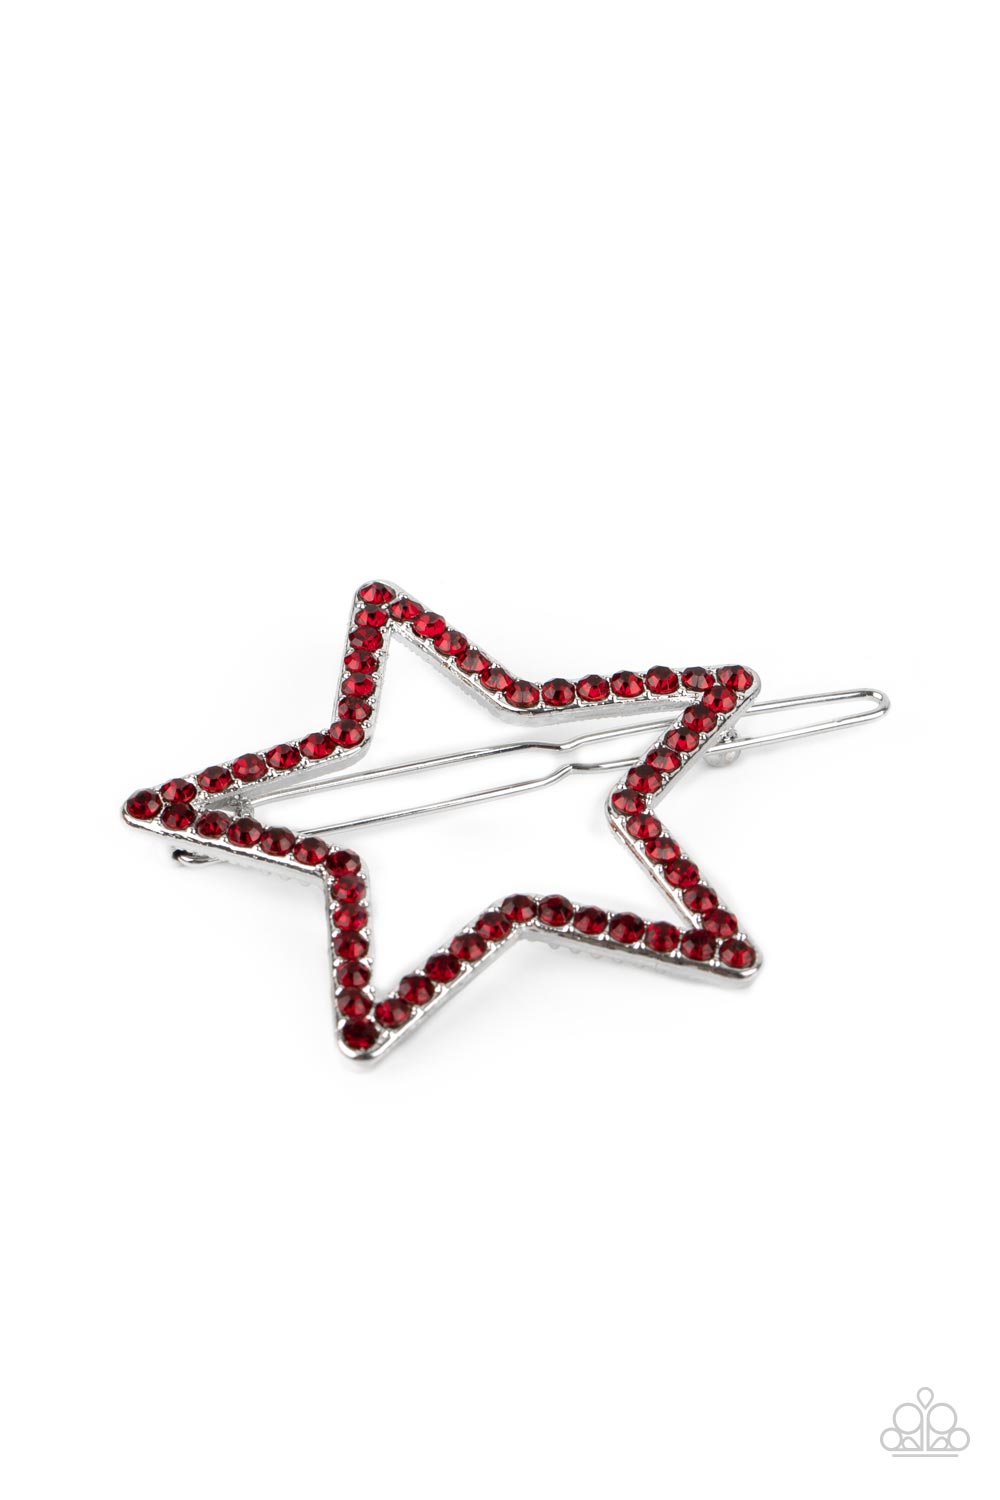 Stellar Standout - Red hair clip 2150